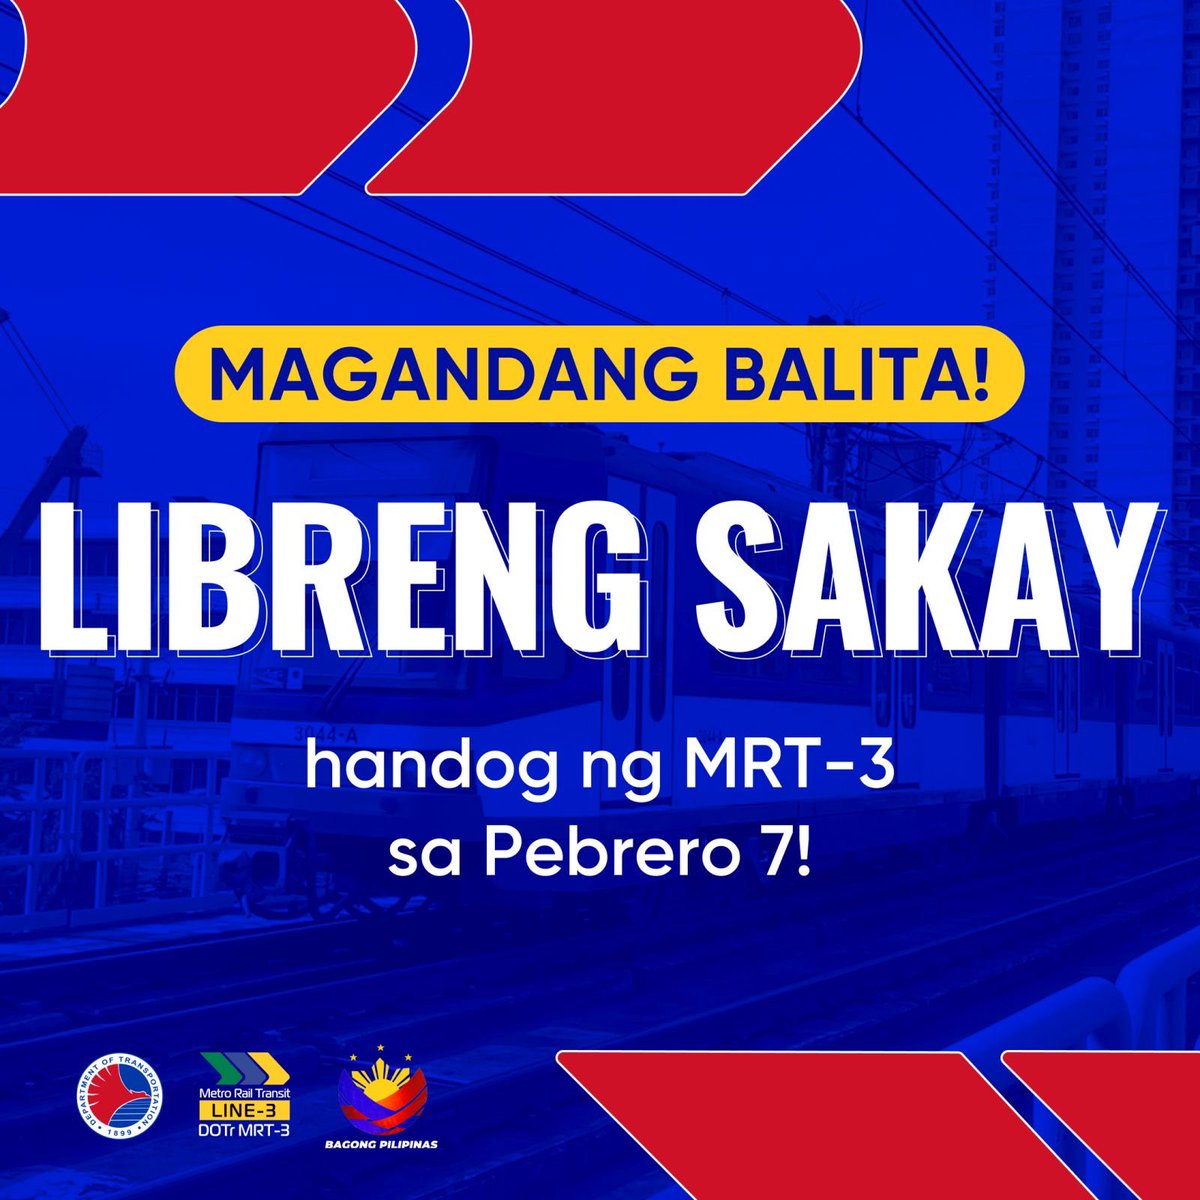 𝐌𝐀𝐆𝐀𝐍𝐃𝐀𝐍𝐆 𝐁𝐀𝐋𝐈𝐓𝐀! 𝐌𝐑𝐓-𝟑, 𝐦𝐚𝐲 𝐡𝐚𝐧𝐝𝐨𝐠 𝐧𝐚 𝐋𝐈𝐁𝐑𝐄𝐍𝐆 𝐒𝐀𝐊𝐀𝐘 𝐧𝐠𝐚𝐲𝐨𝐧𝐠 𝐚𝐫𝐚𝐰 𝐩𝐚𝐫𝐚 𝐬𝐚 𝐚𝐧𝐢𝐛𝐞𝐫𝐬𝐚𝐫𝐲𝐨 𝐧𝐠 𝐃𝐎𝐓𝐫 BASAHIN: facebook.com/share/p/rRkXb5… #DOTrPH 🇵🇭 #SulongMRT3 #BagongPilipinas #RailwaysAtYourService